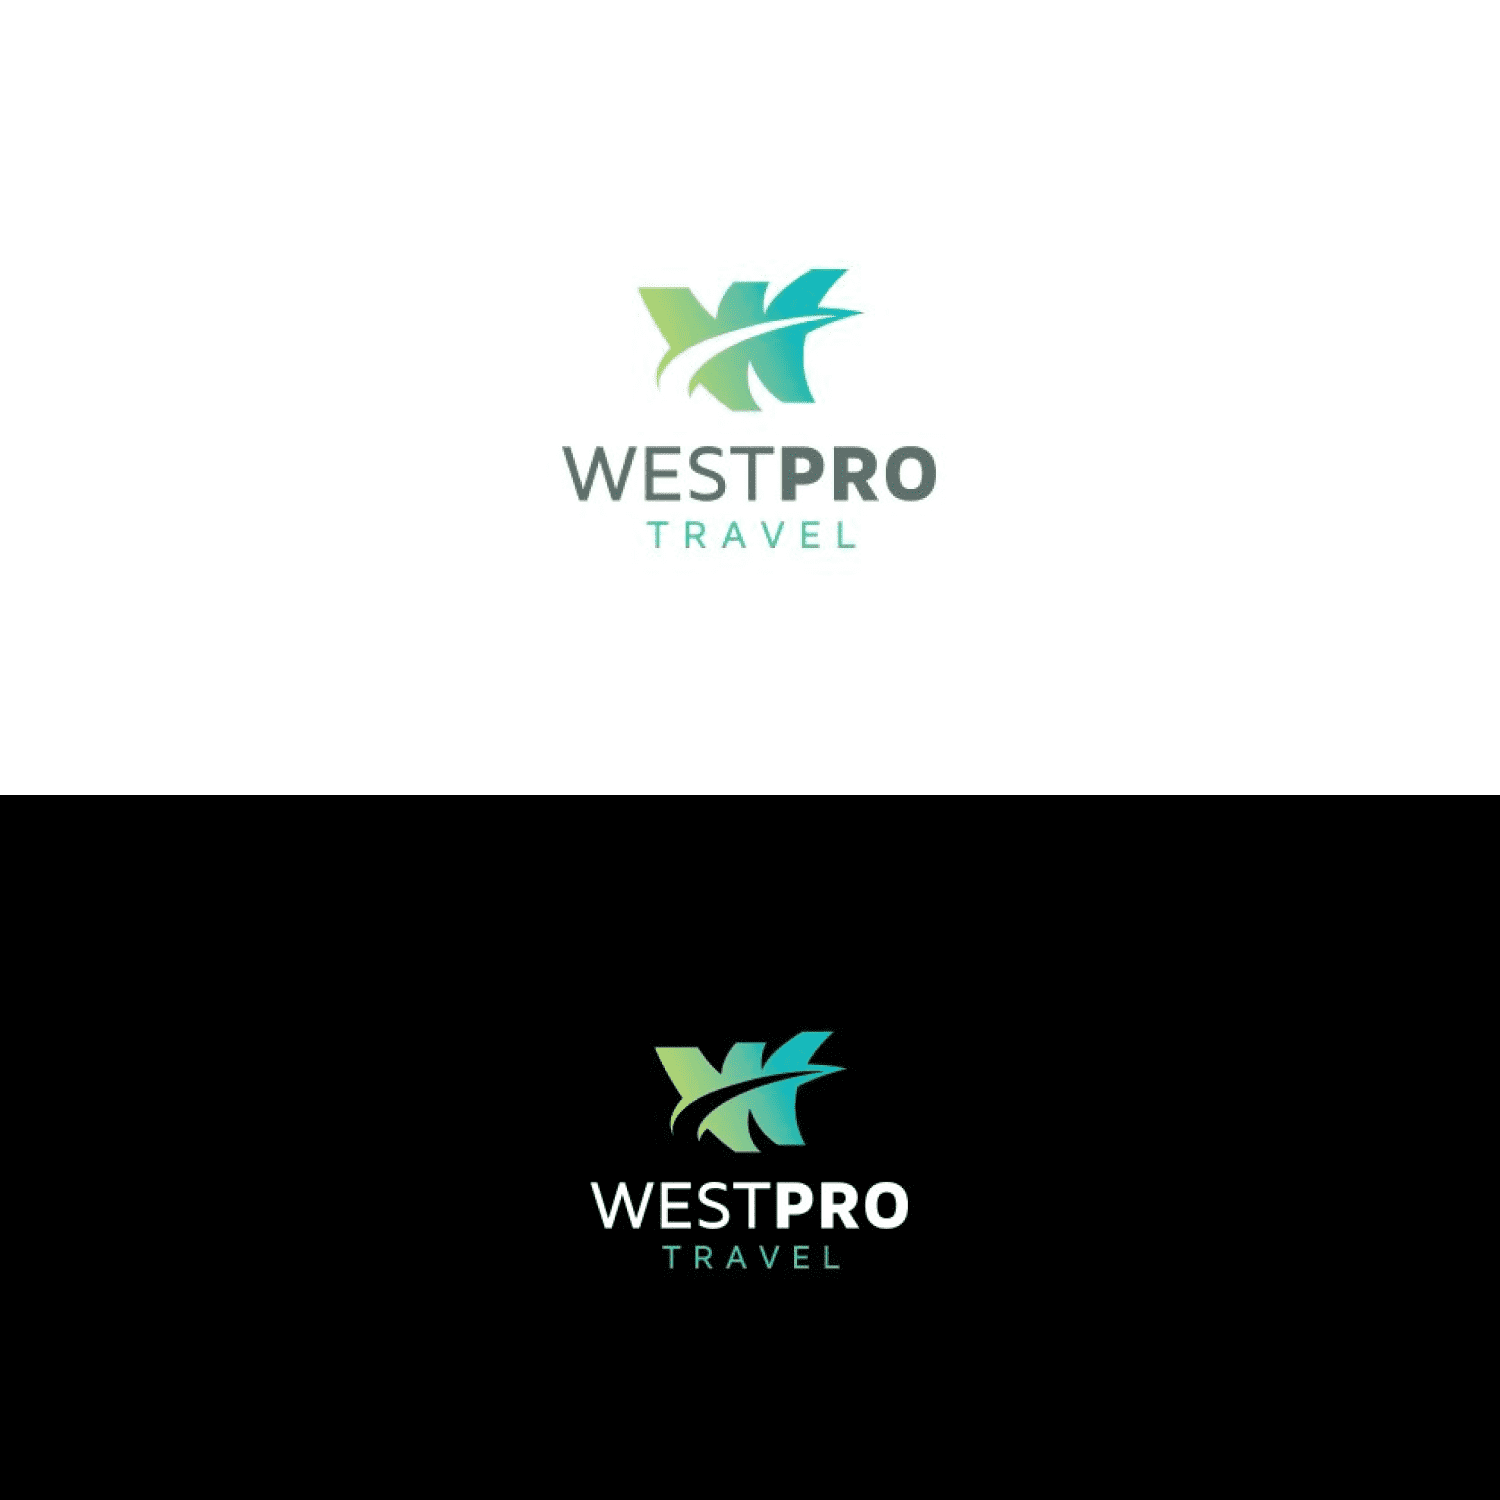 Westpro - Letter W Logo cover.